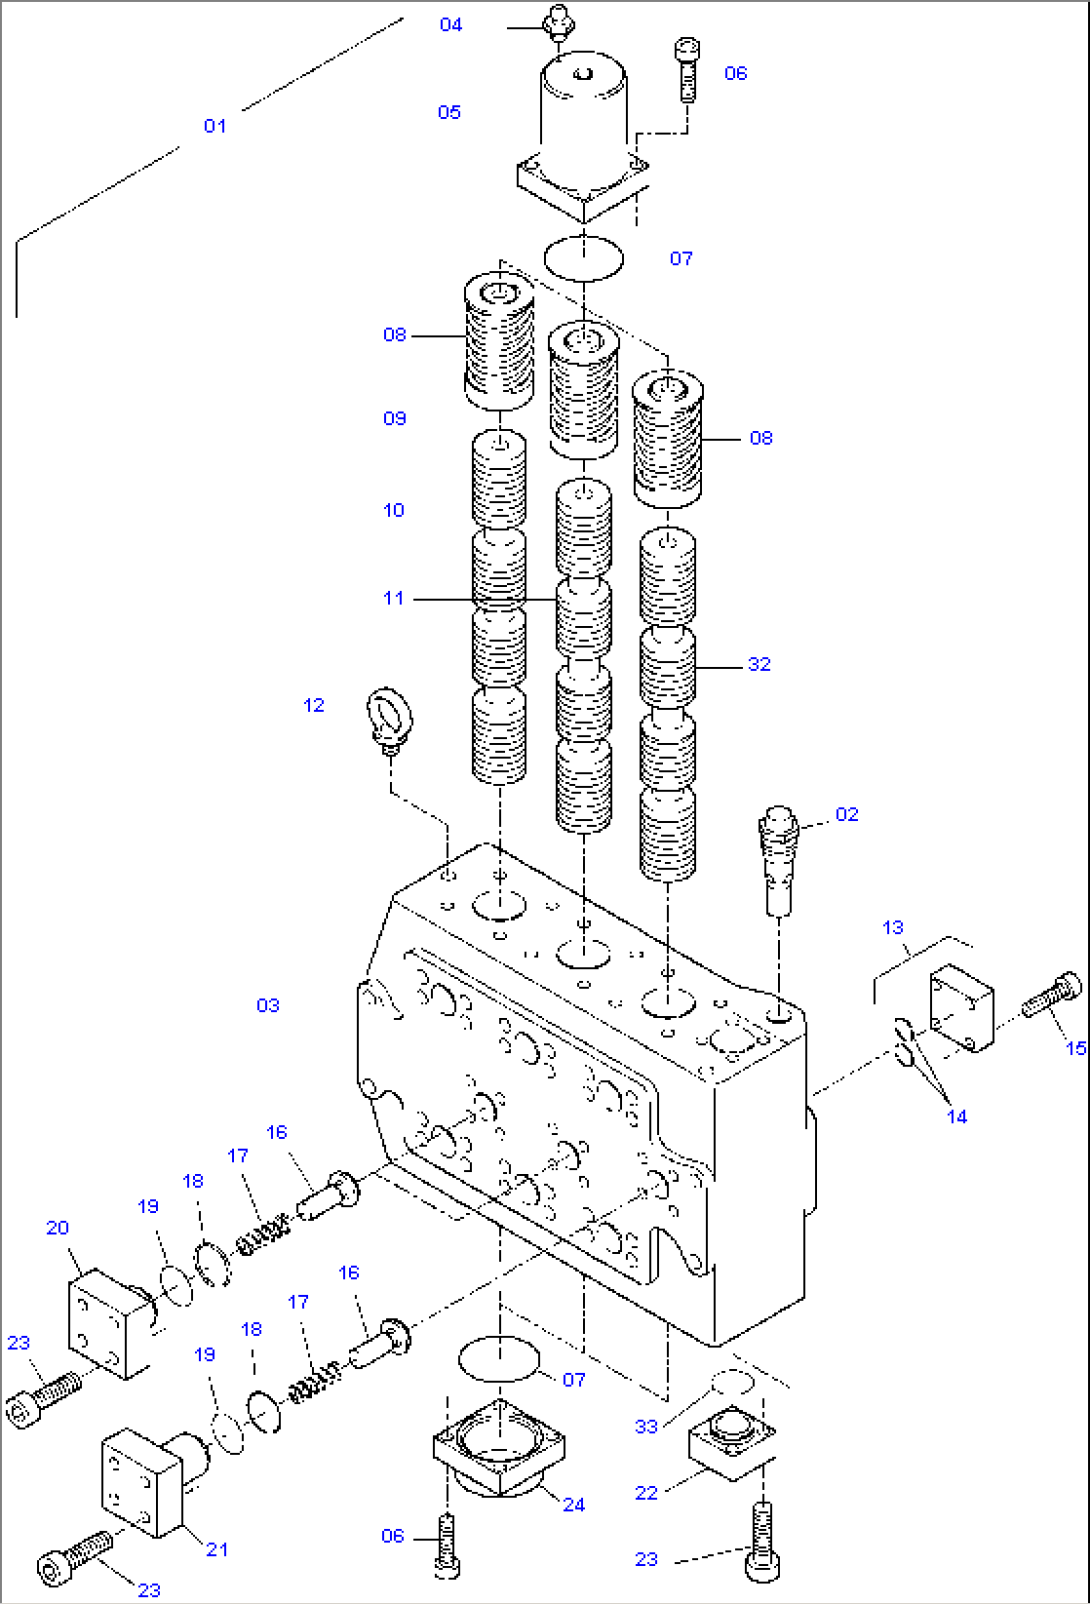 3-Fold Control Block